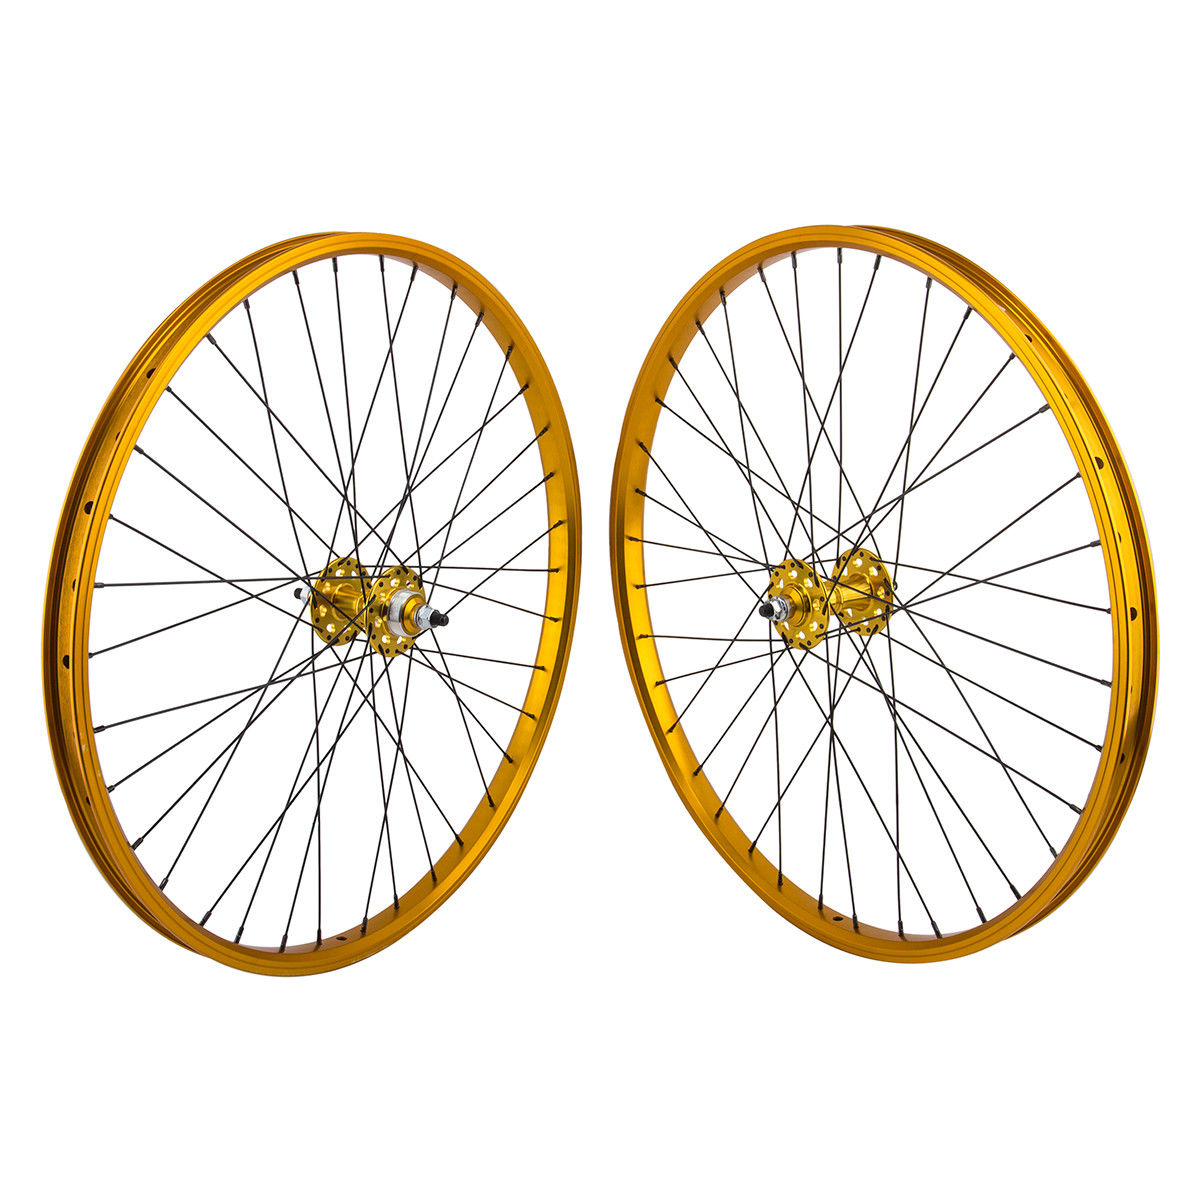 26" SE Racing Wheelset - Pair - 36H - Double Wall - Sealed Bearing - Freewheel - Gold